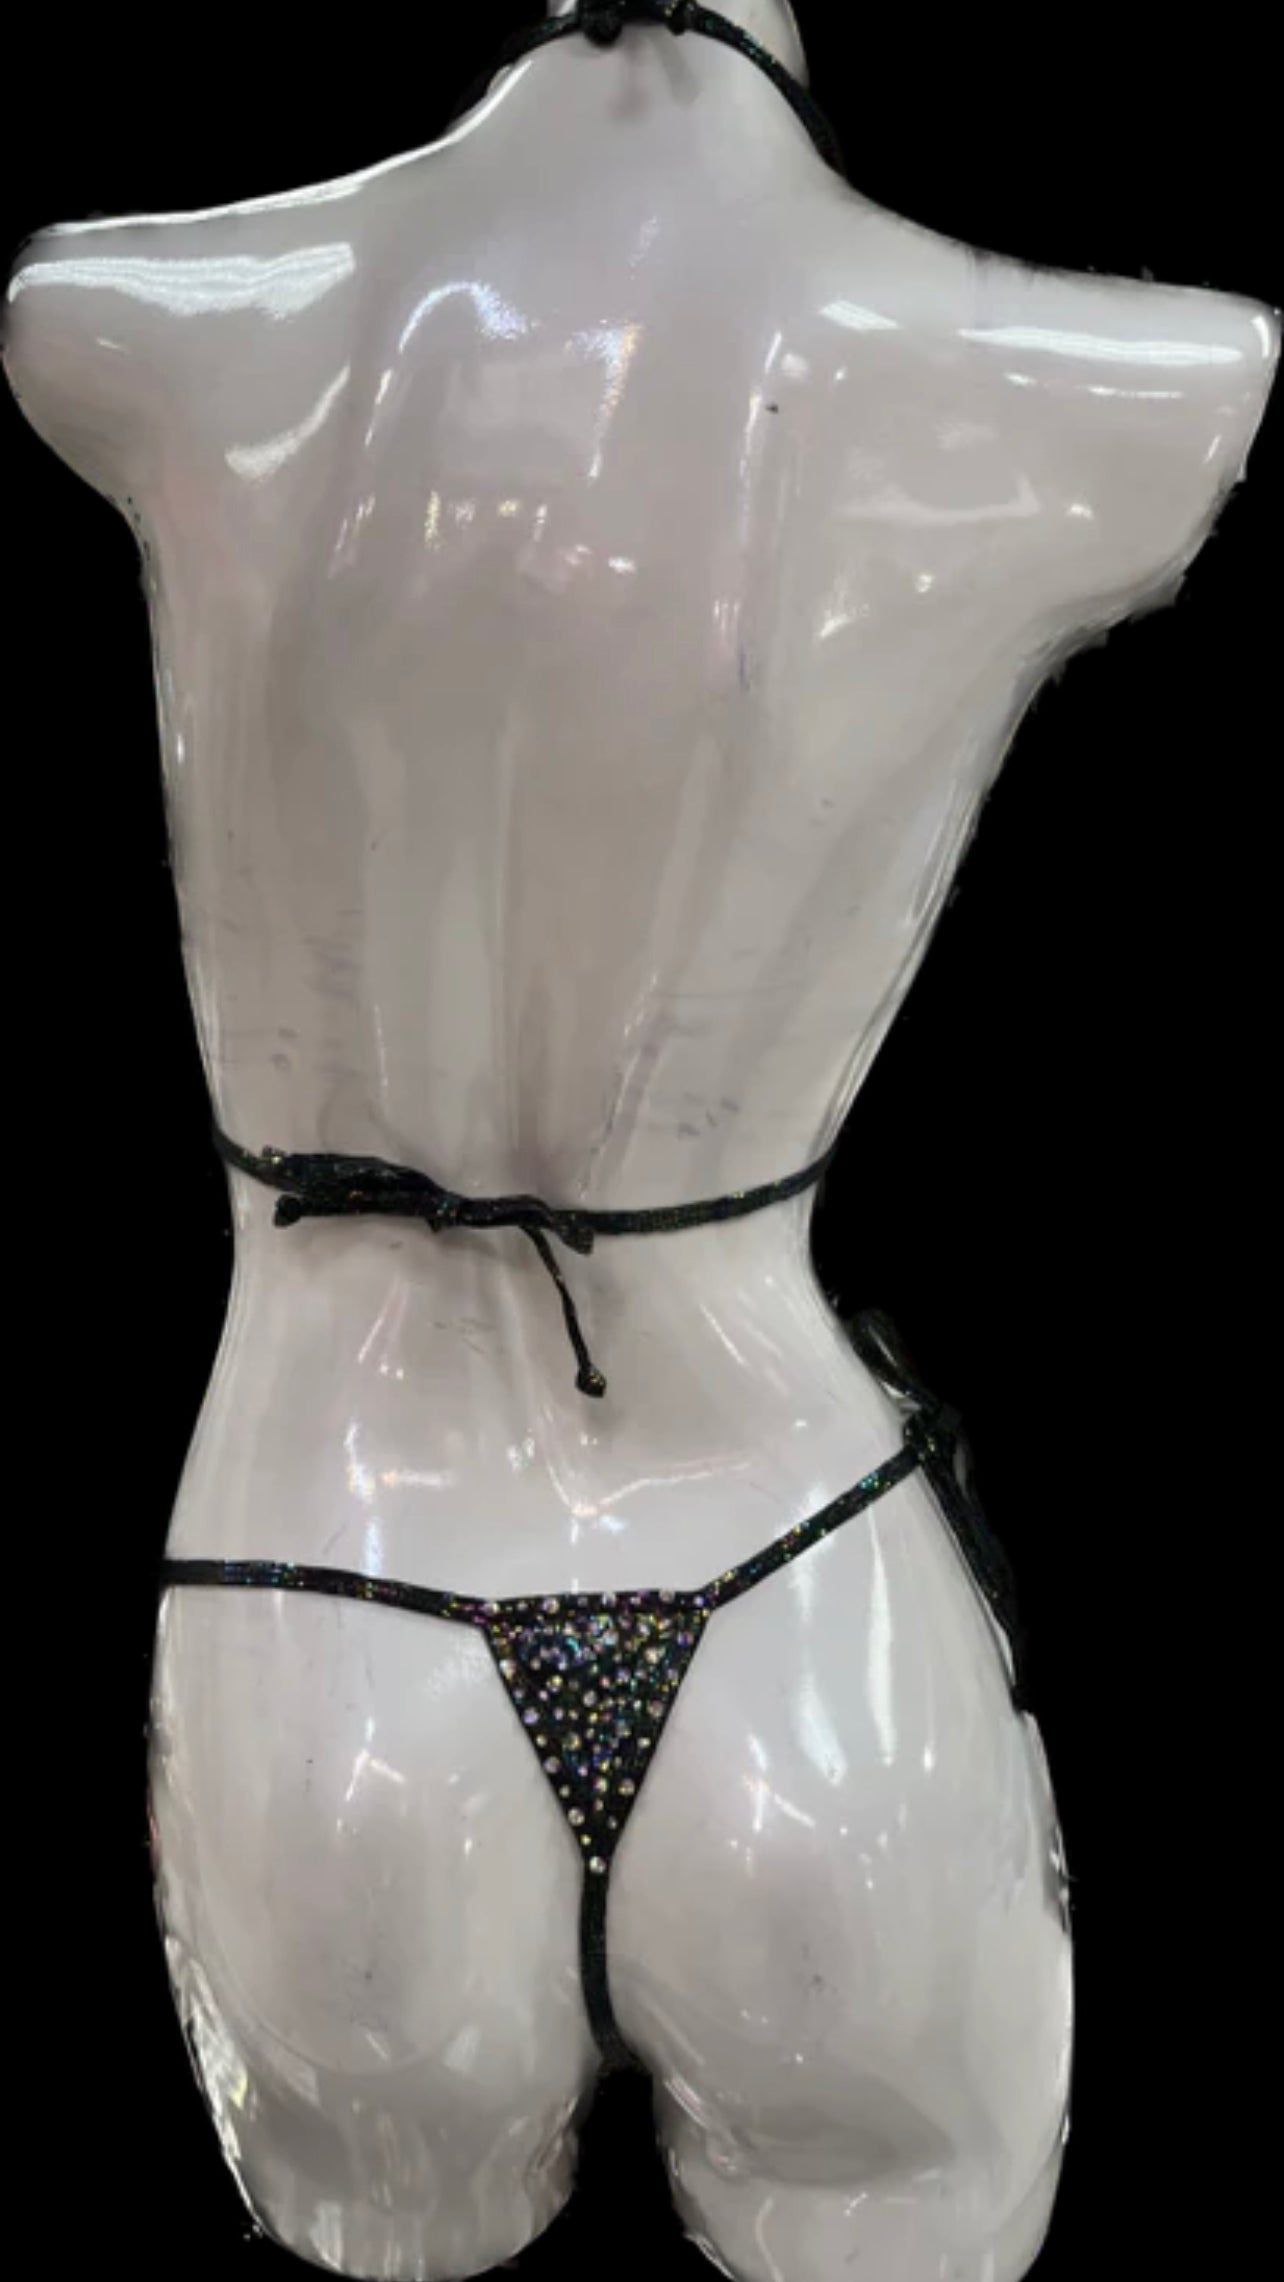 Crystal Under boob Micro Bikini Set